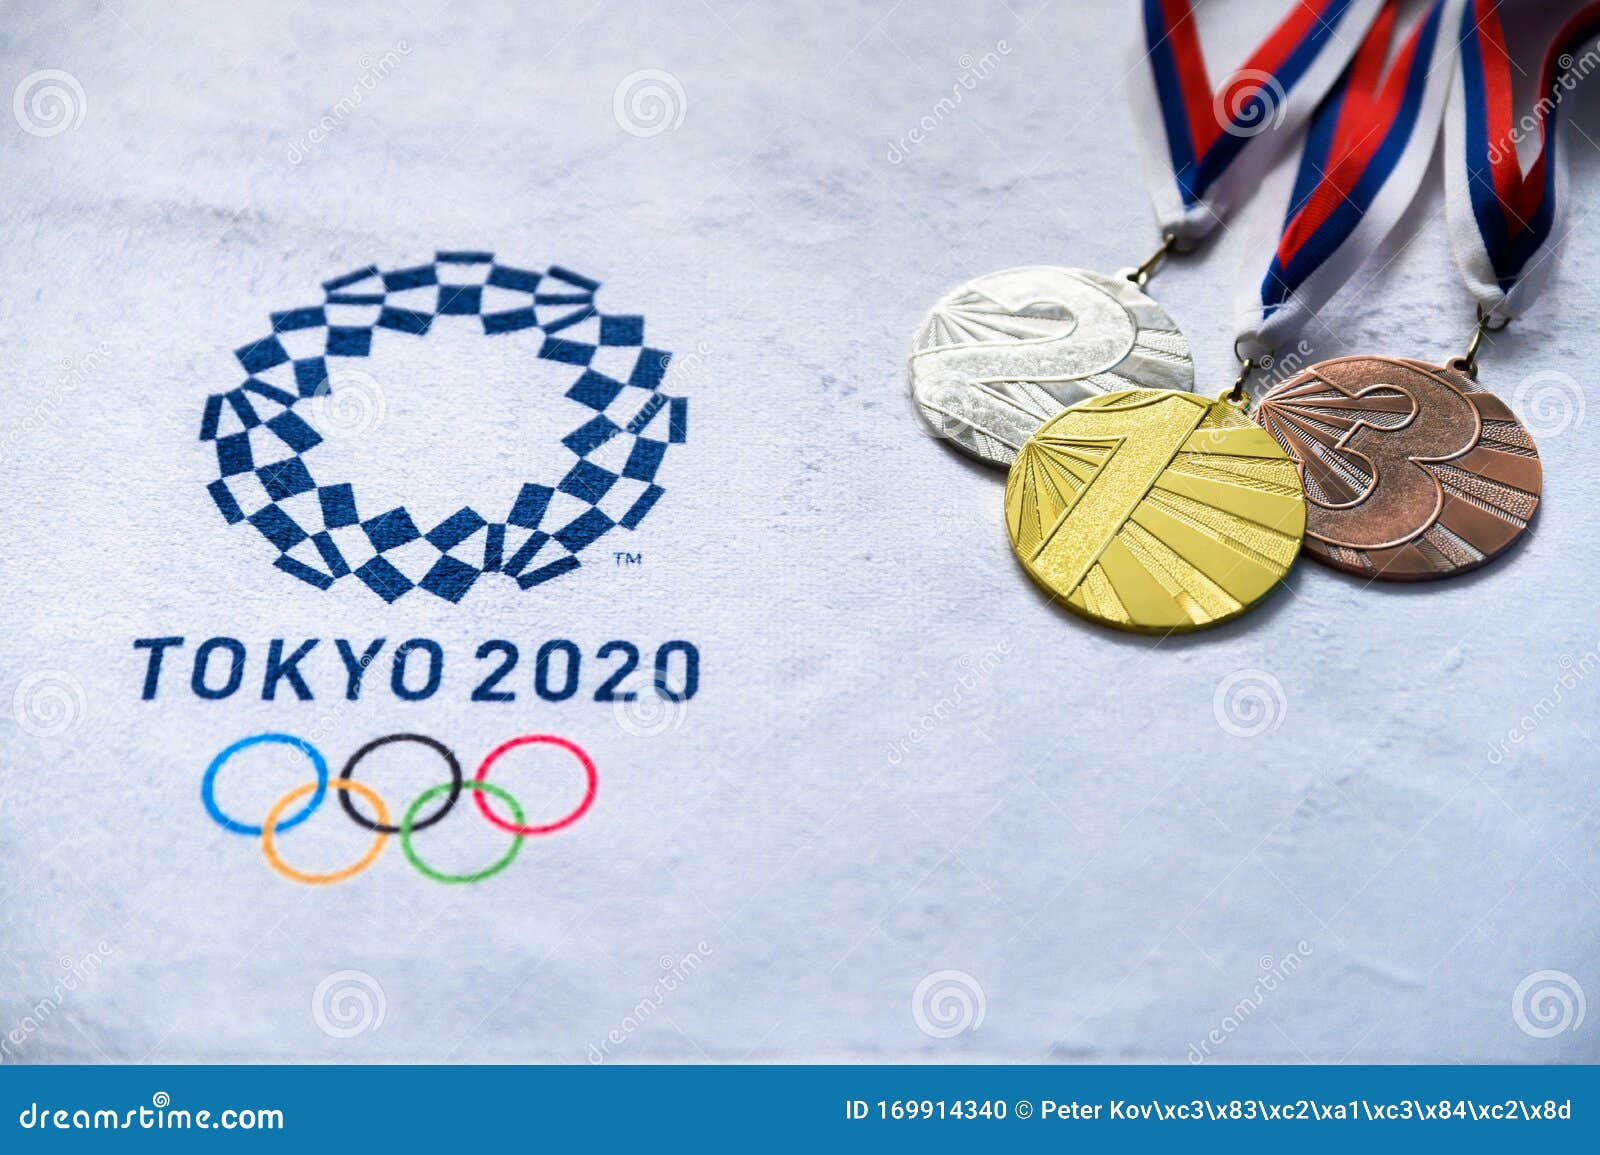 2020 tokyo medal tally